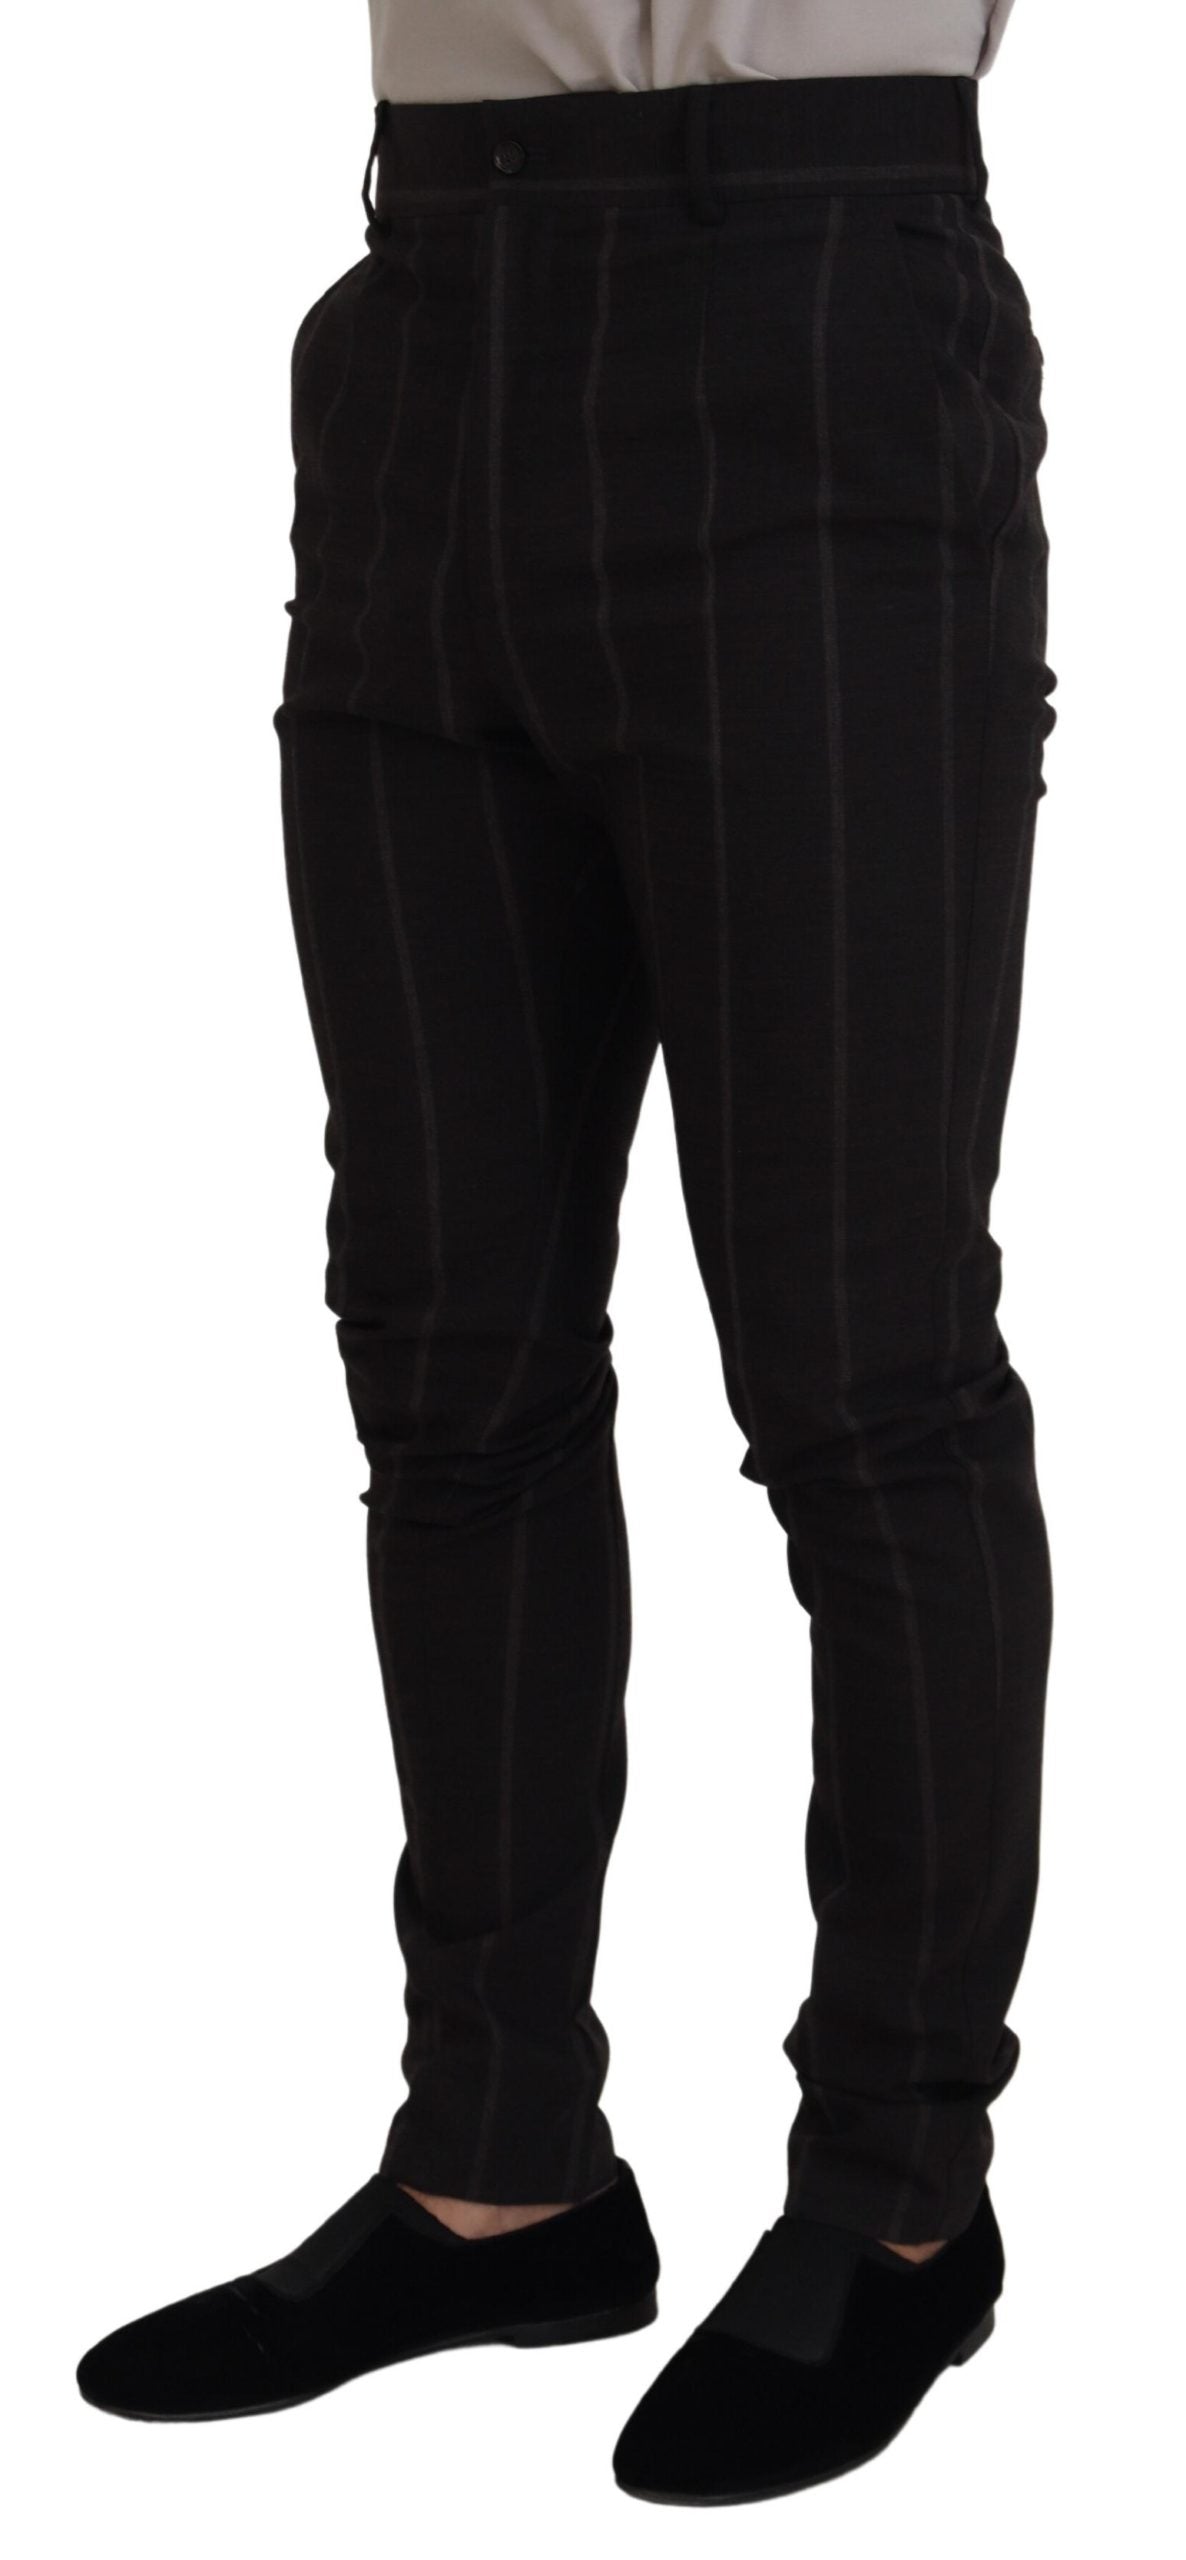 Dolce & Gabbana Elegant Black Striped Chino Pants